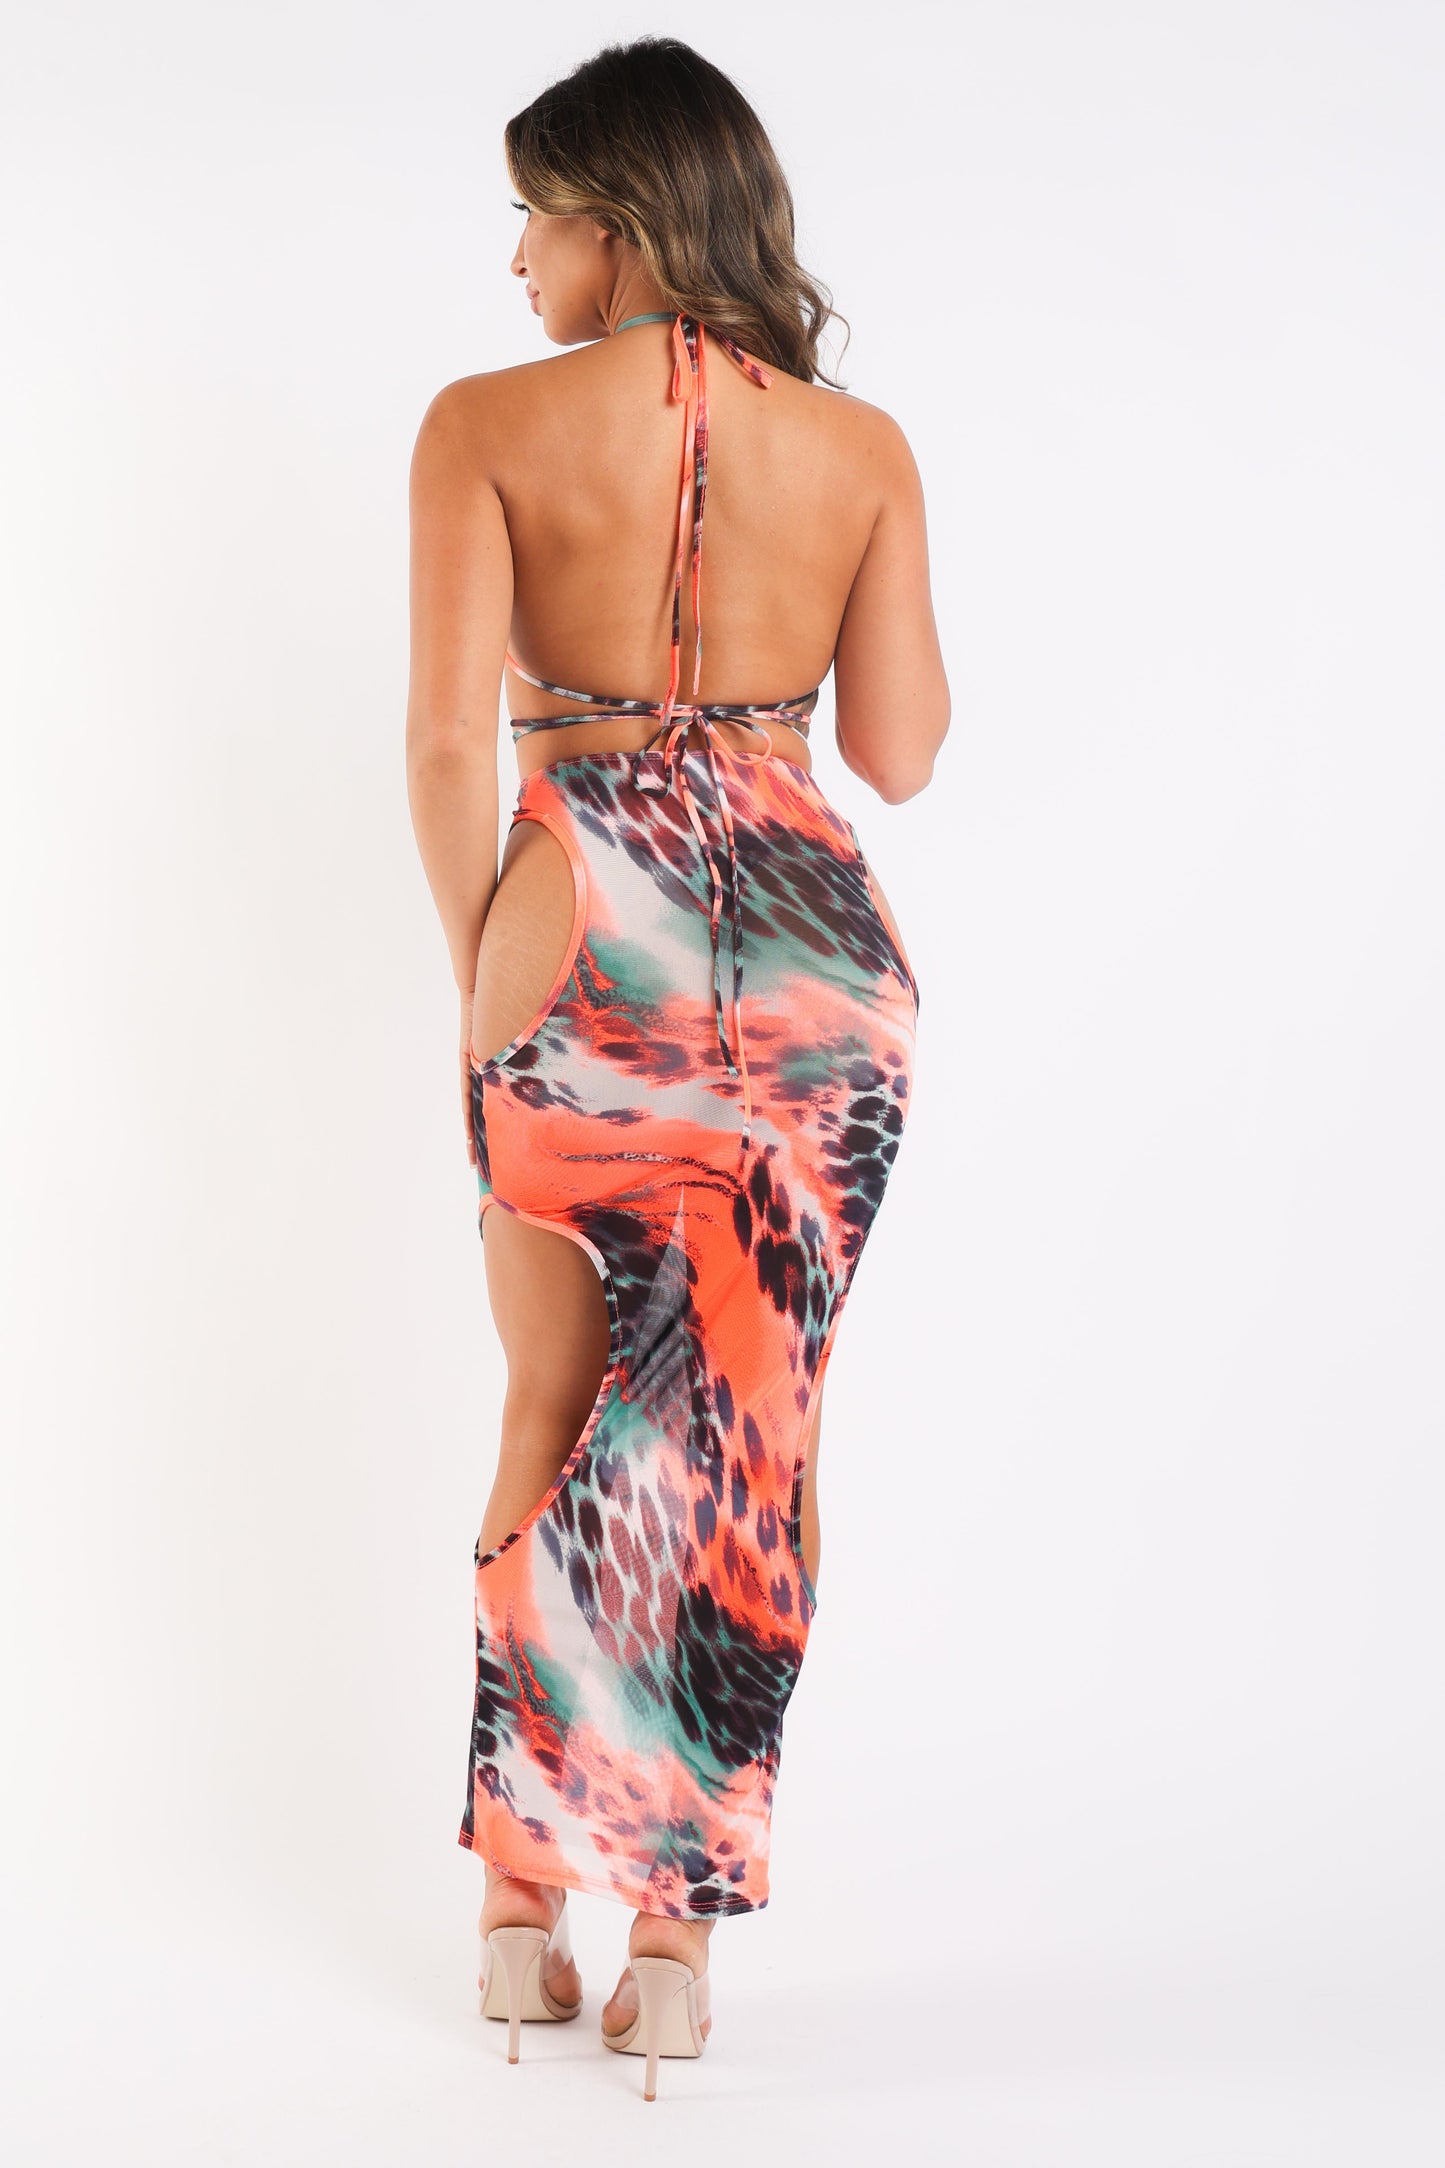 Mesh Sexy Bikini & Skirt Set Graphic Printed Cut Out Swimwear CORAL